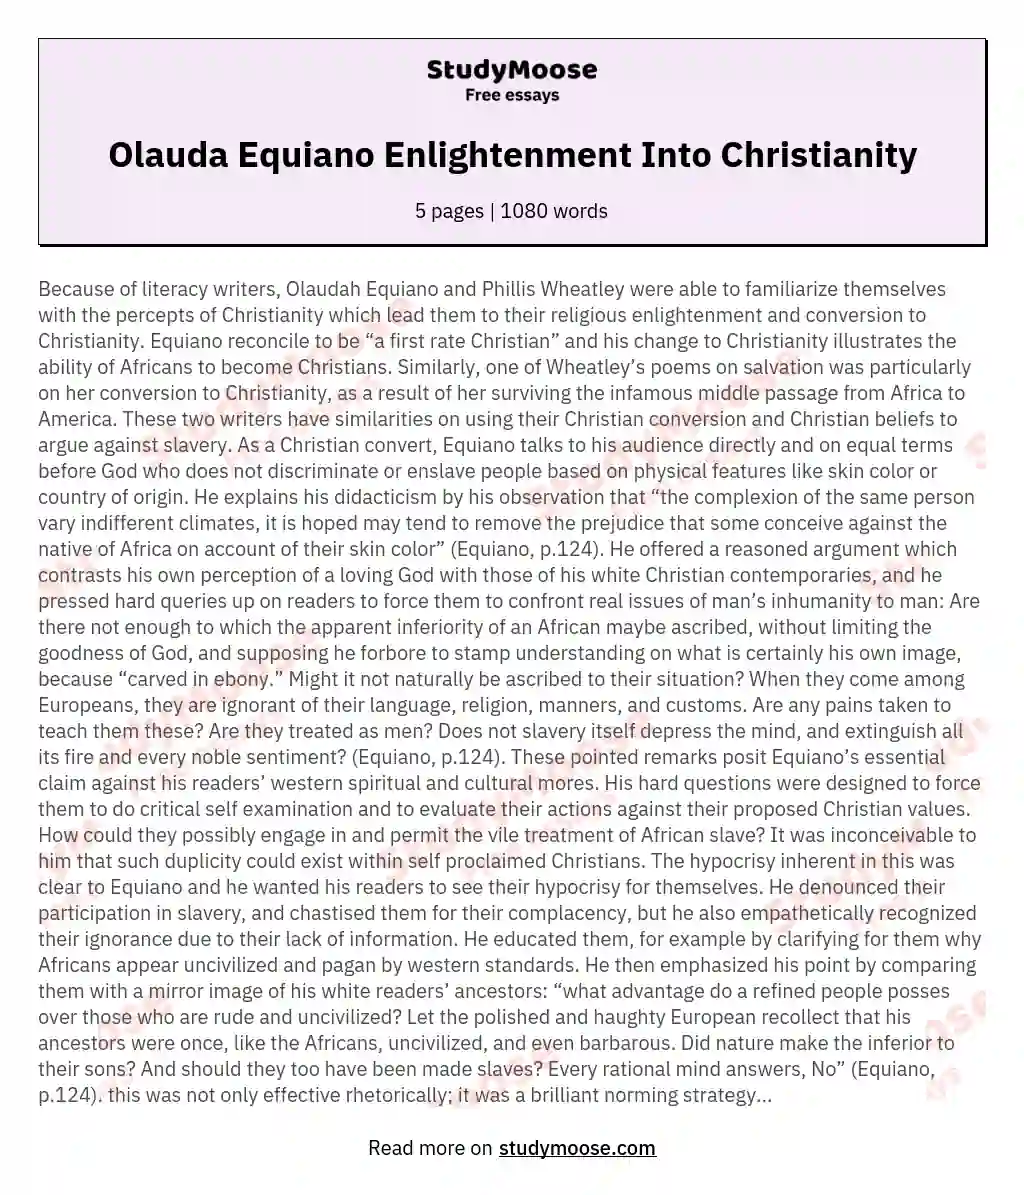 Olauda Equiano Enlightenment Into Christianity essay